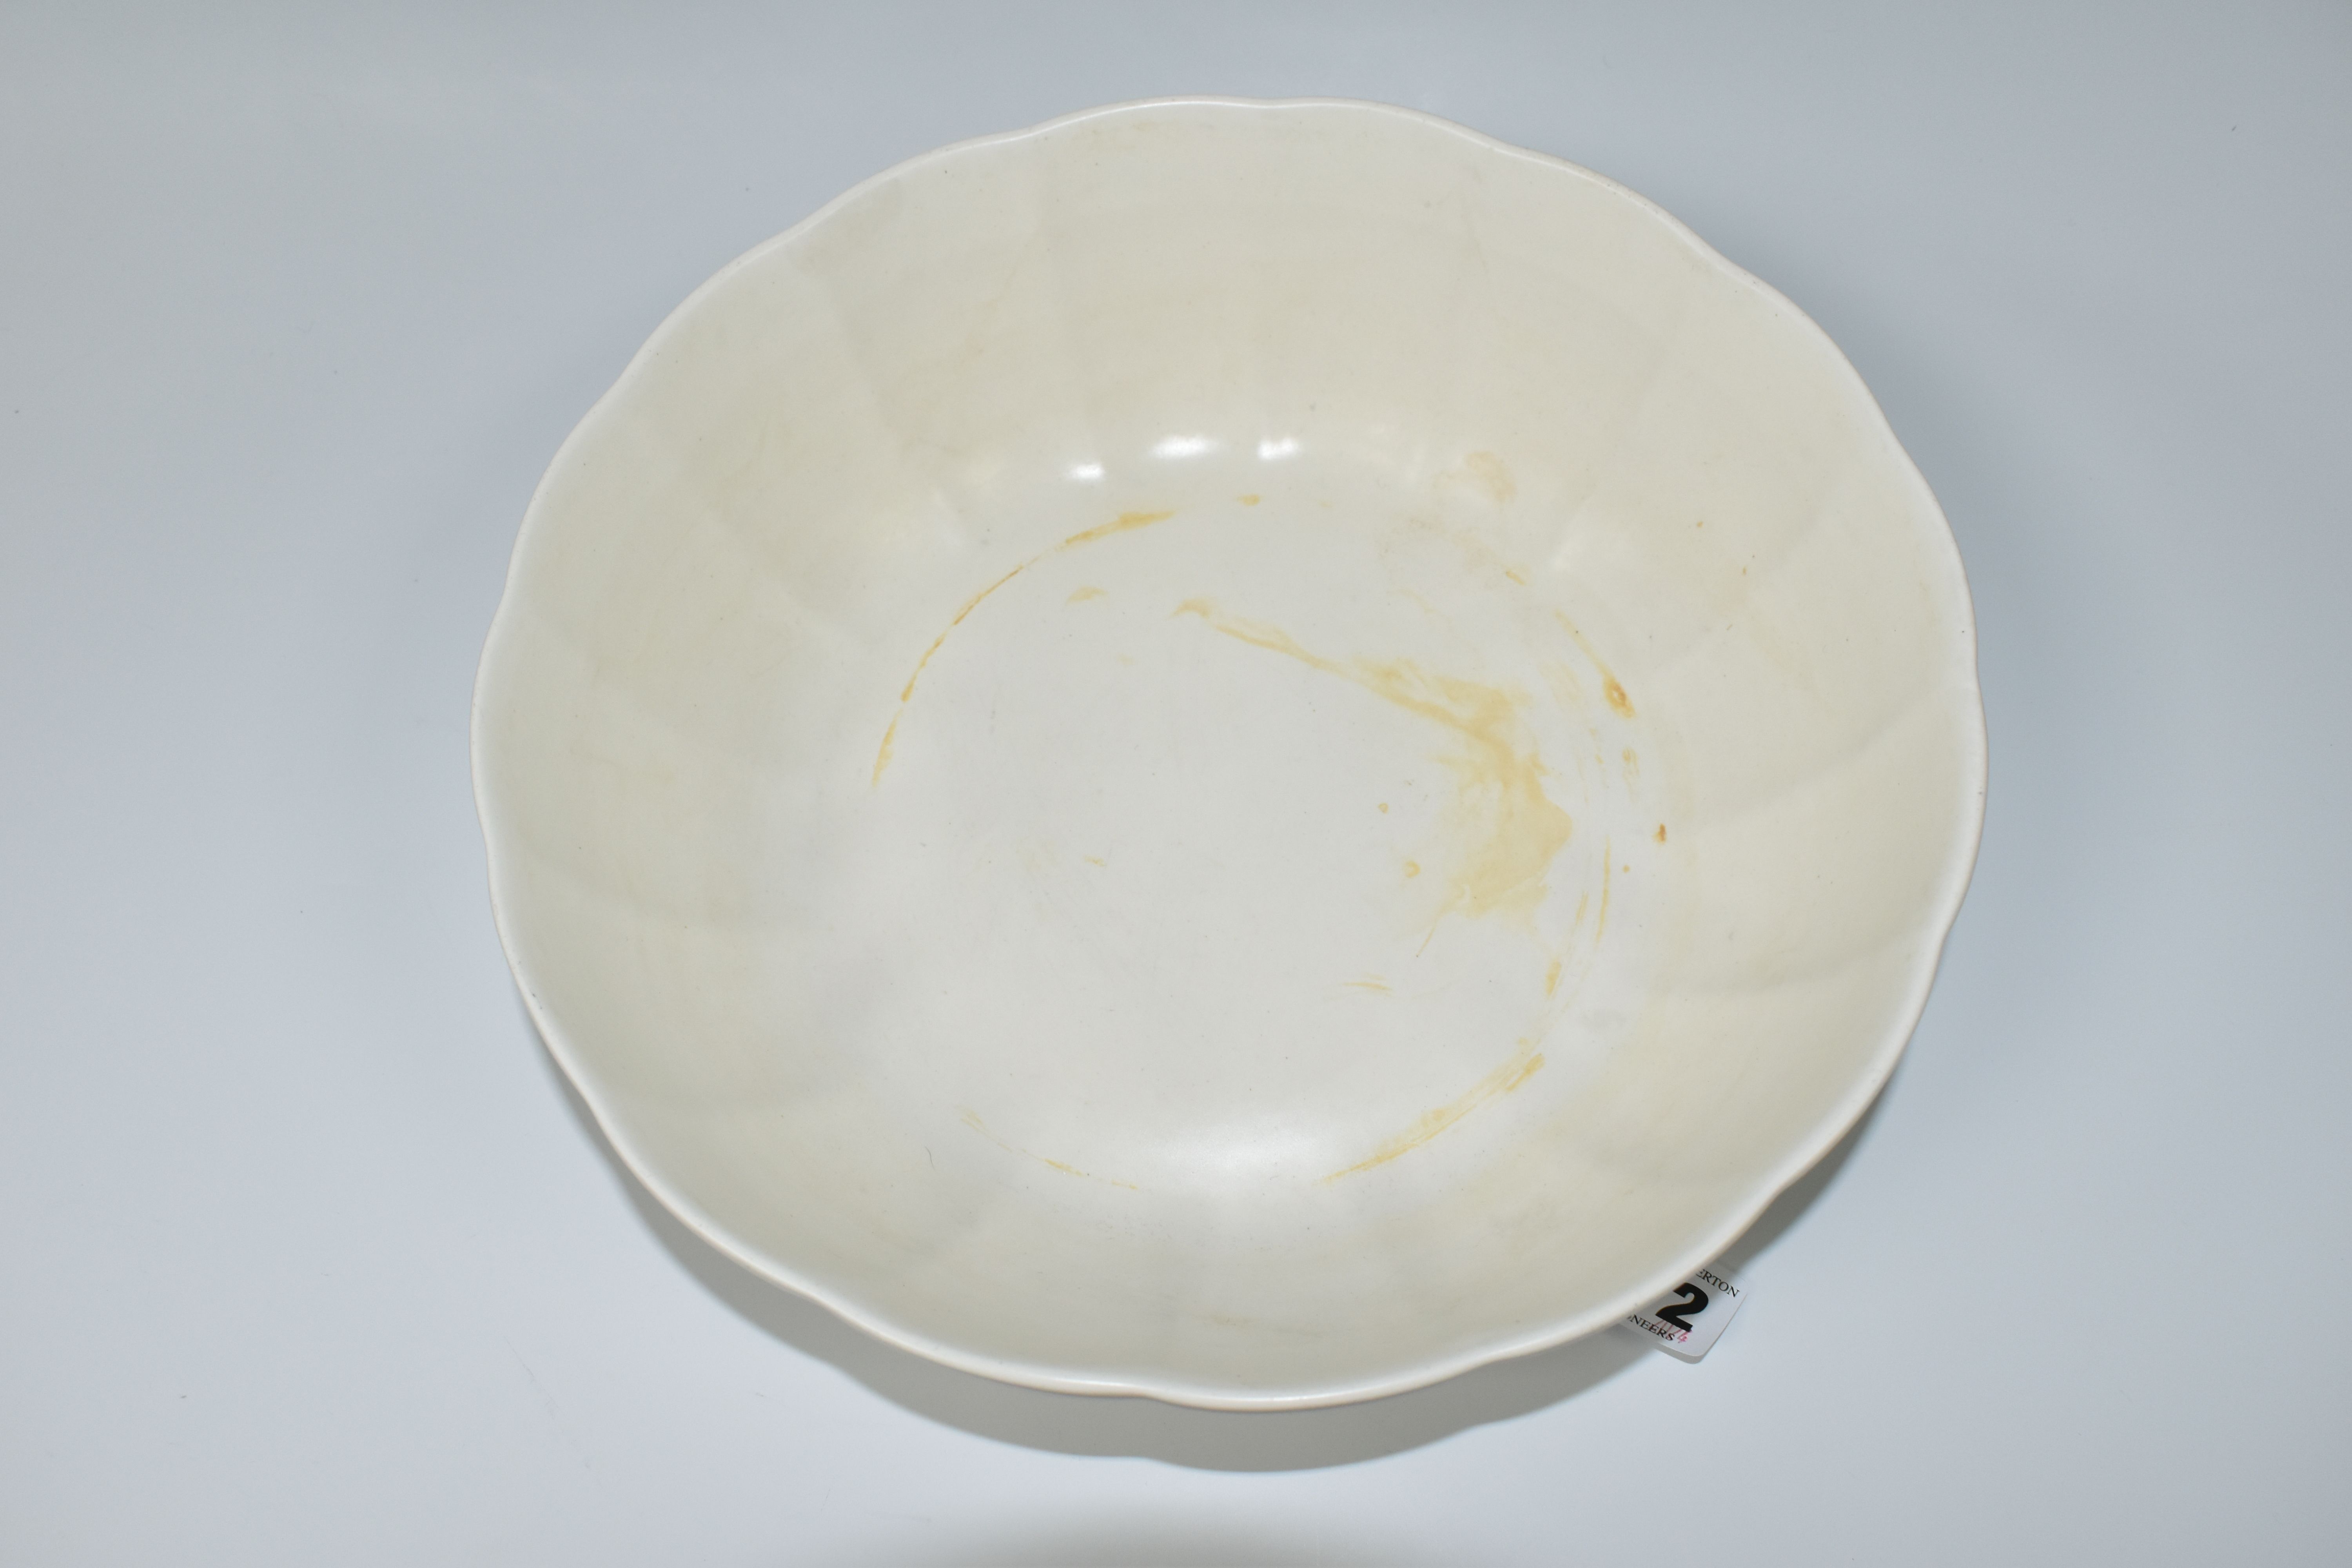 A KEITH MURRAY DESIGN BOWL FOR WEDGWOOD, a cream fluted bowl, blue printed backstamp, diameter - Image 2 of 6